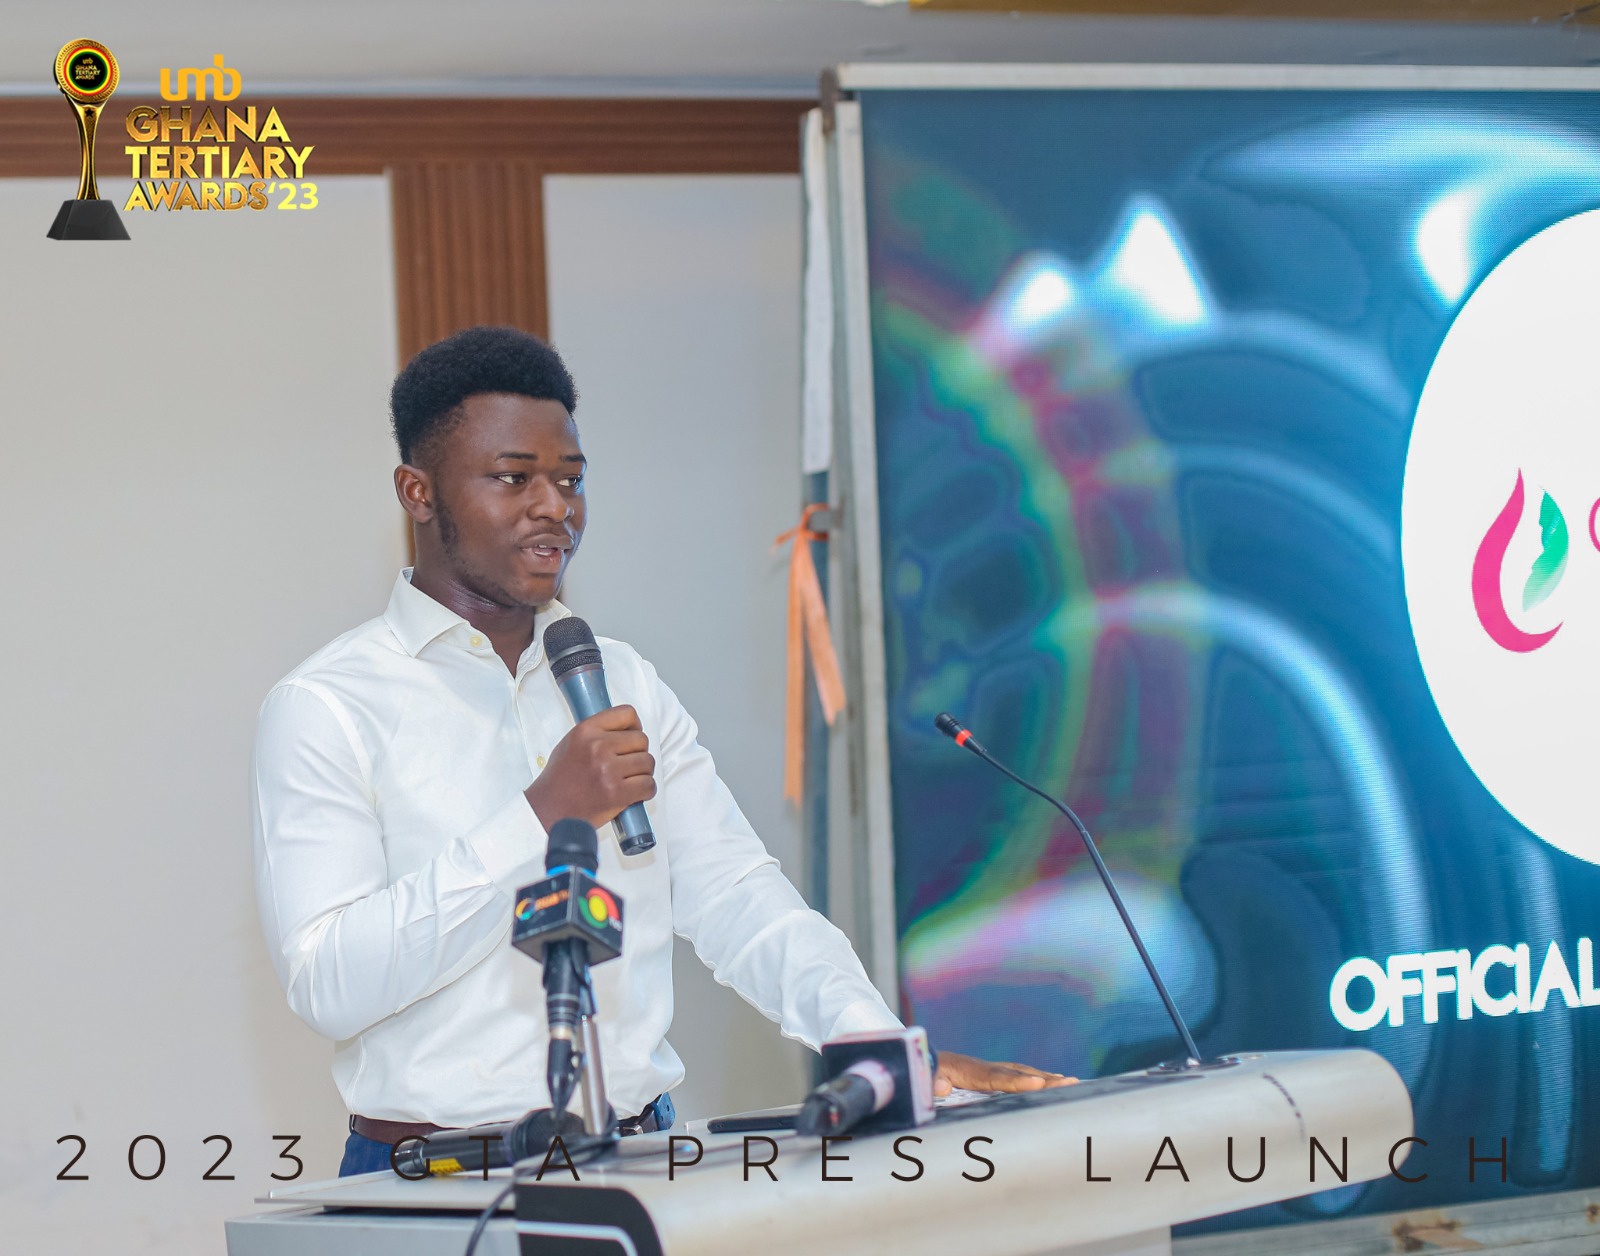 UMB Ghana Tertiary Awards 2023 Press Launch